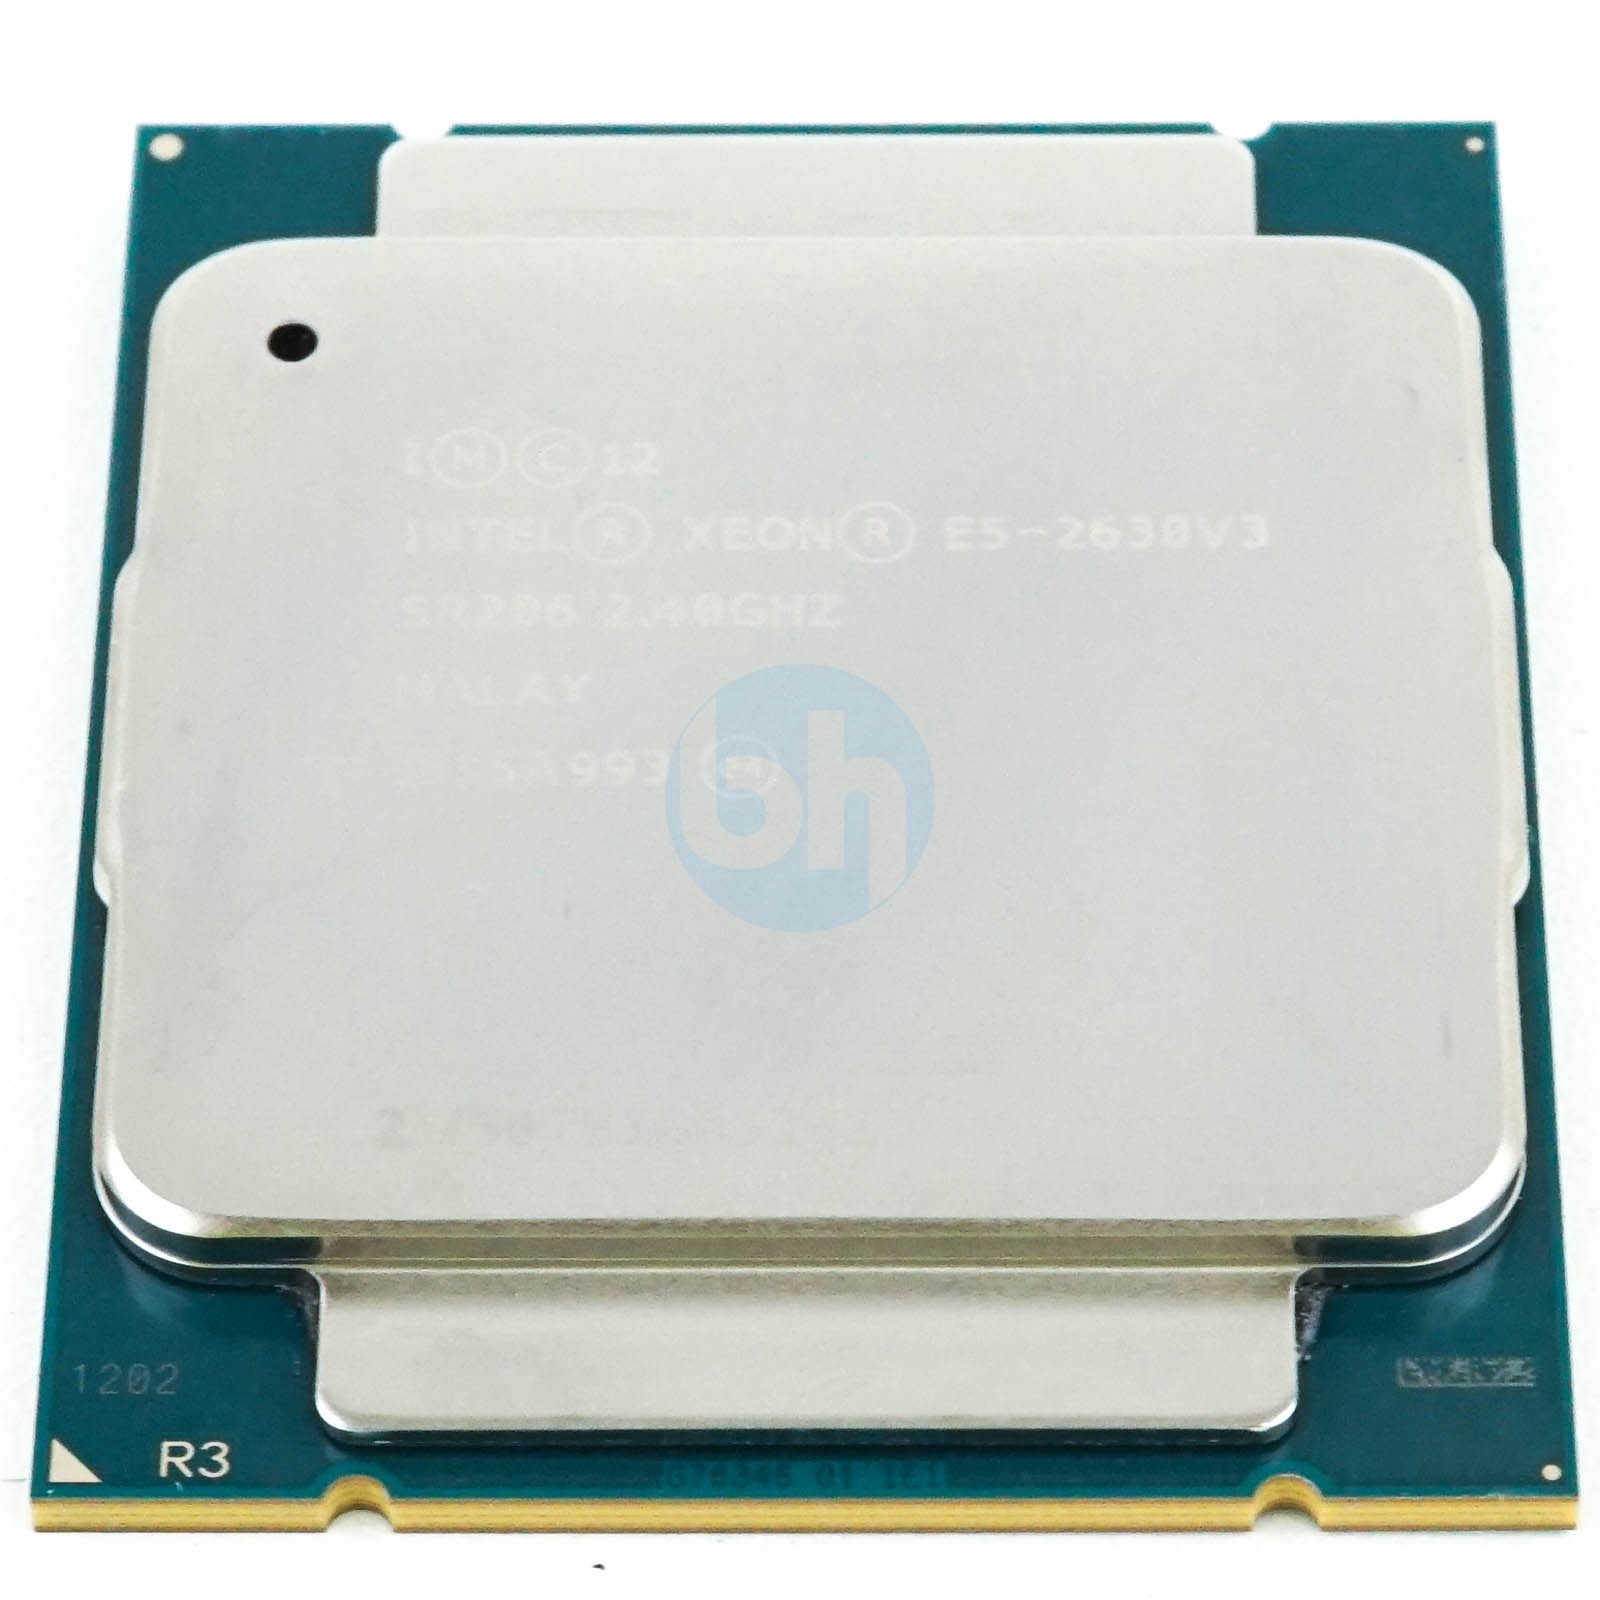 Intel Xeon E5-2630 V3 (SR206) - 8-Core 2.40GHz LGA2011-3 20MB 85W CPU